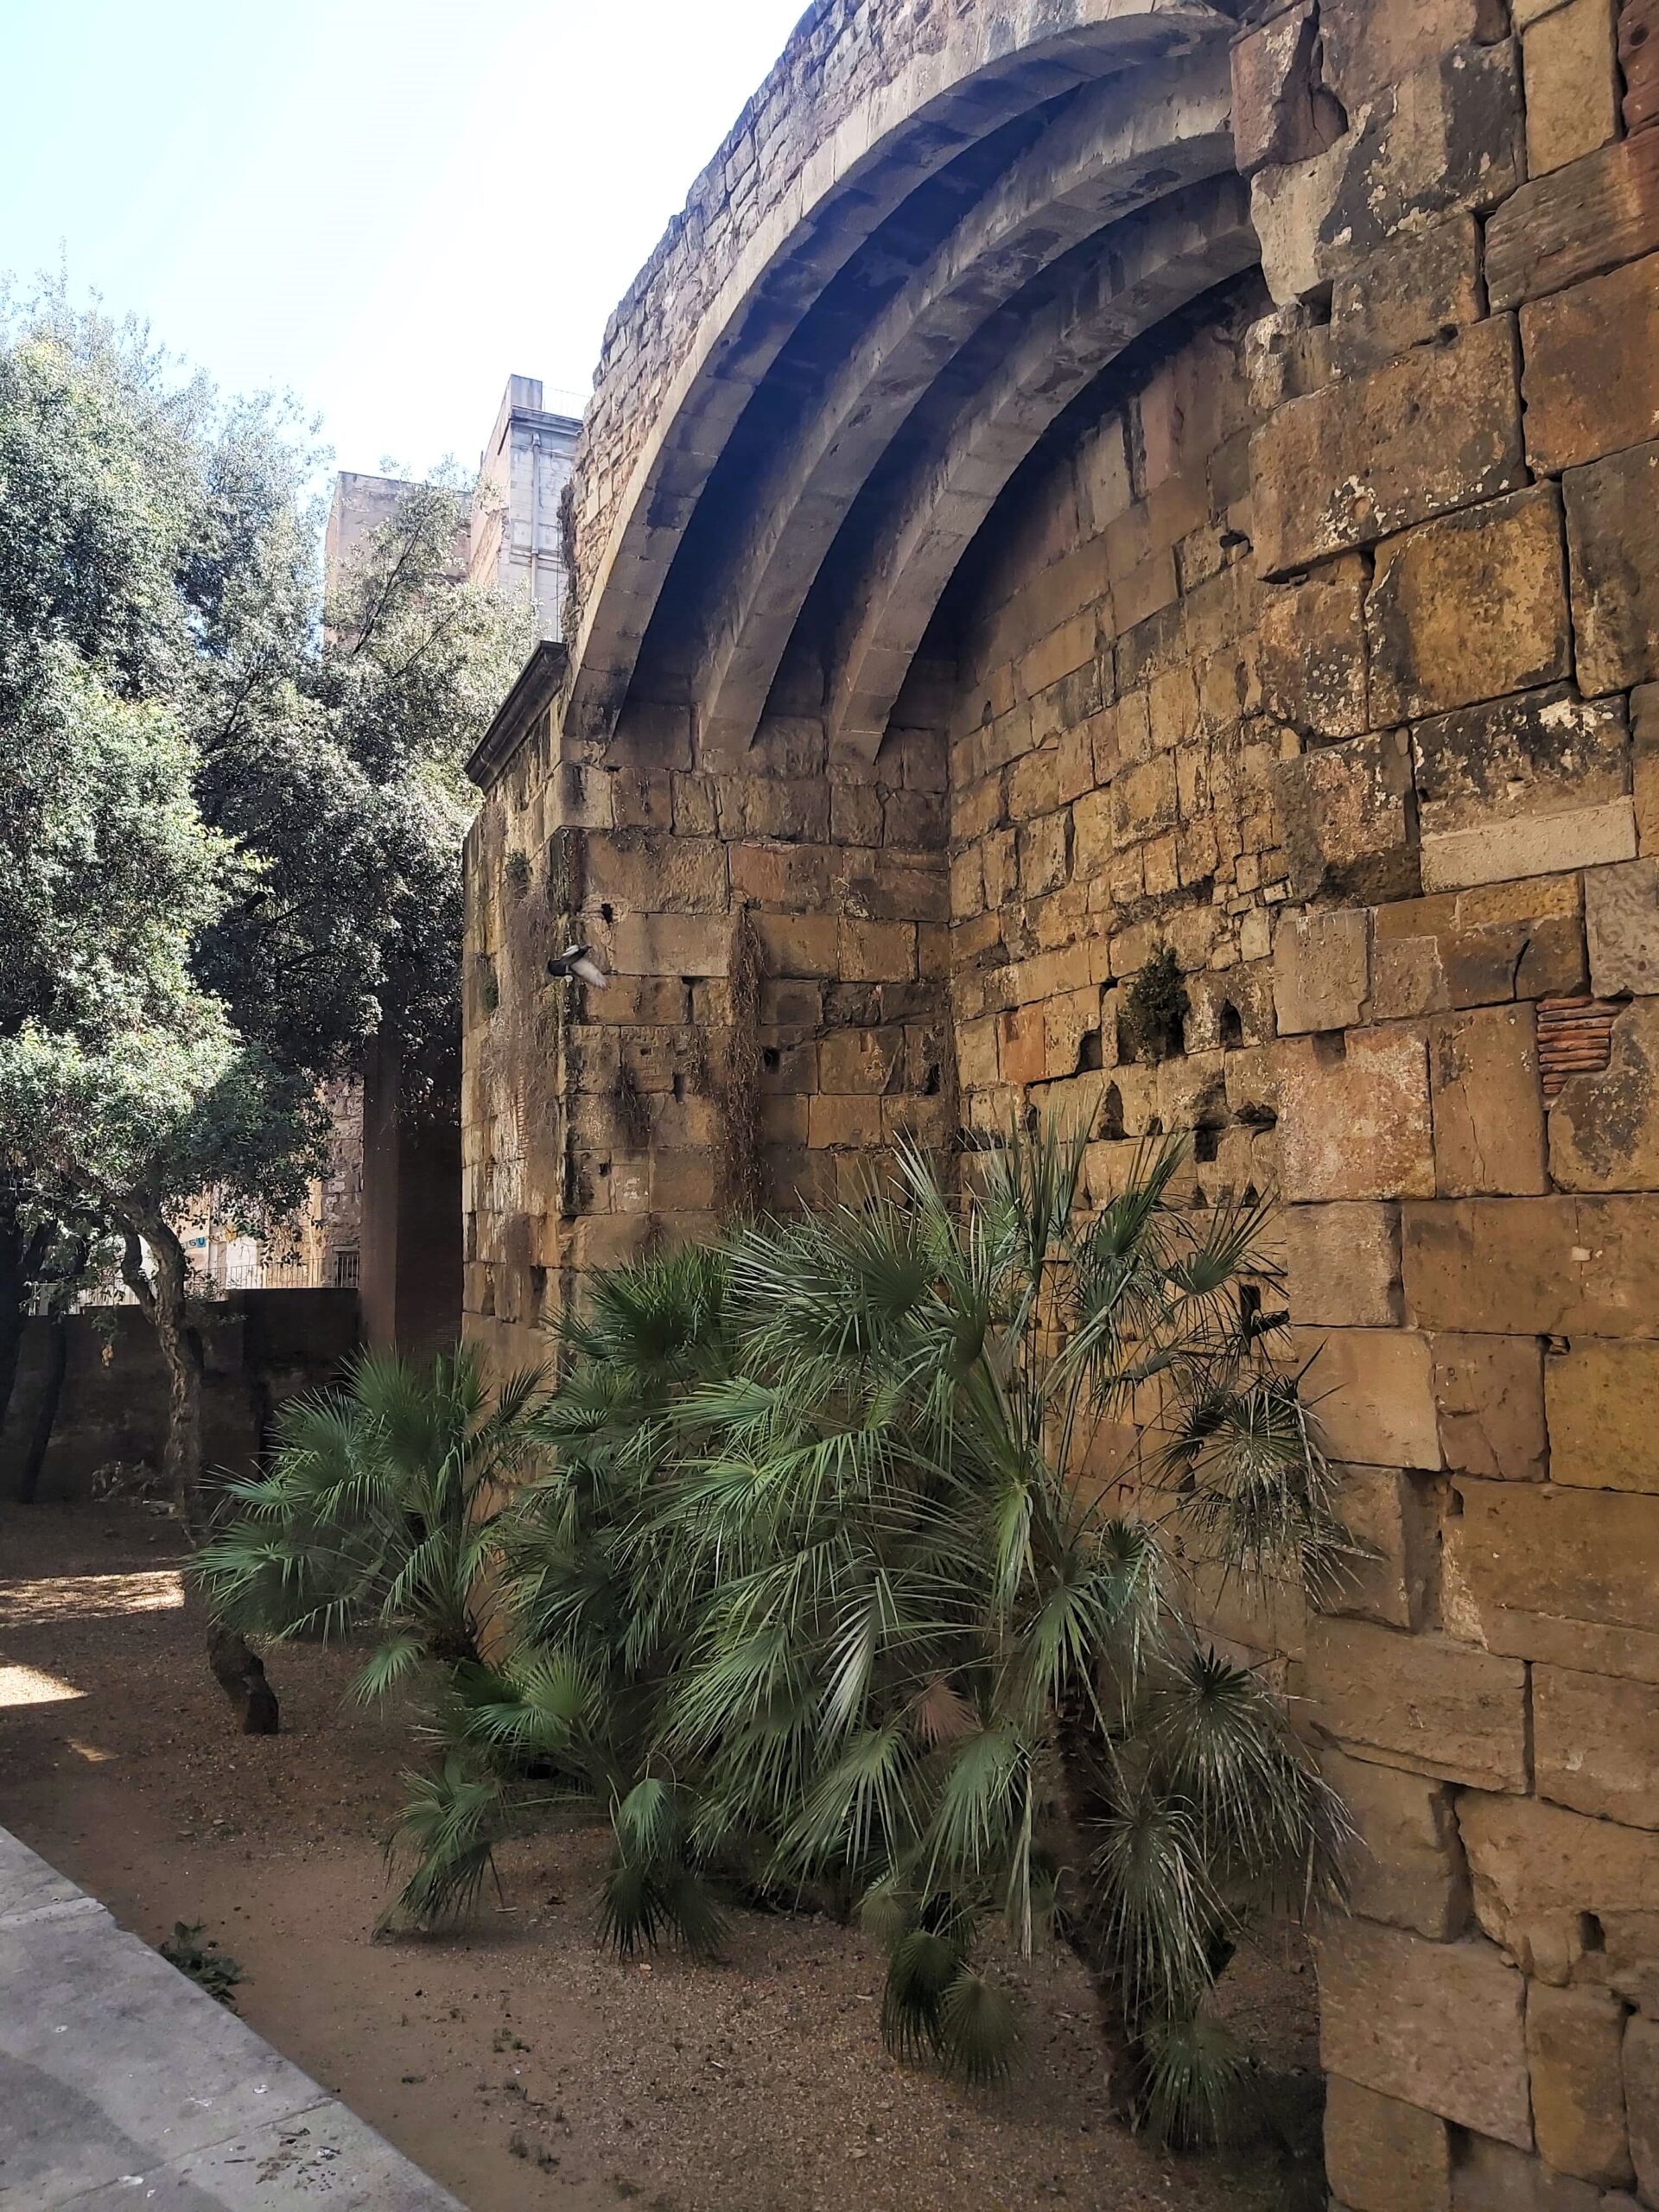 Part of a Roman wall in Barcelona, Spain